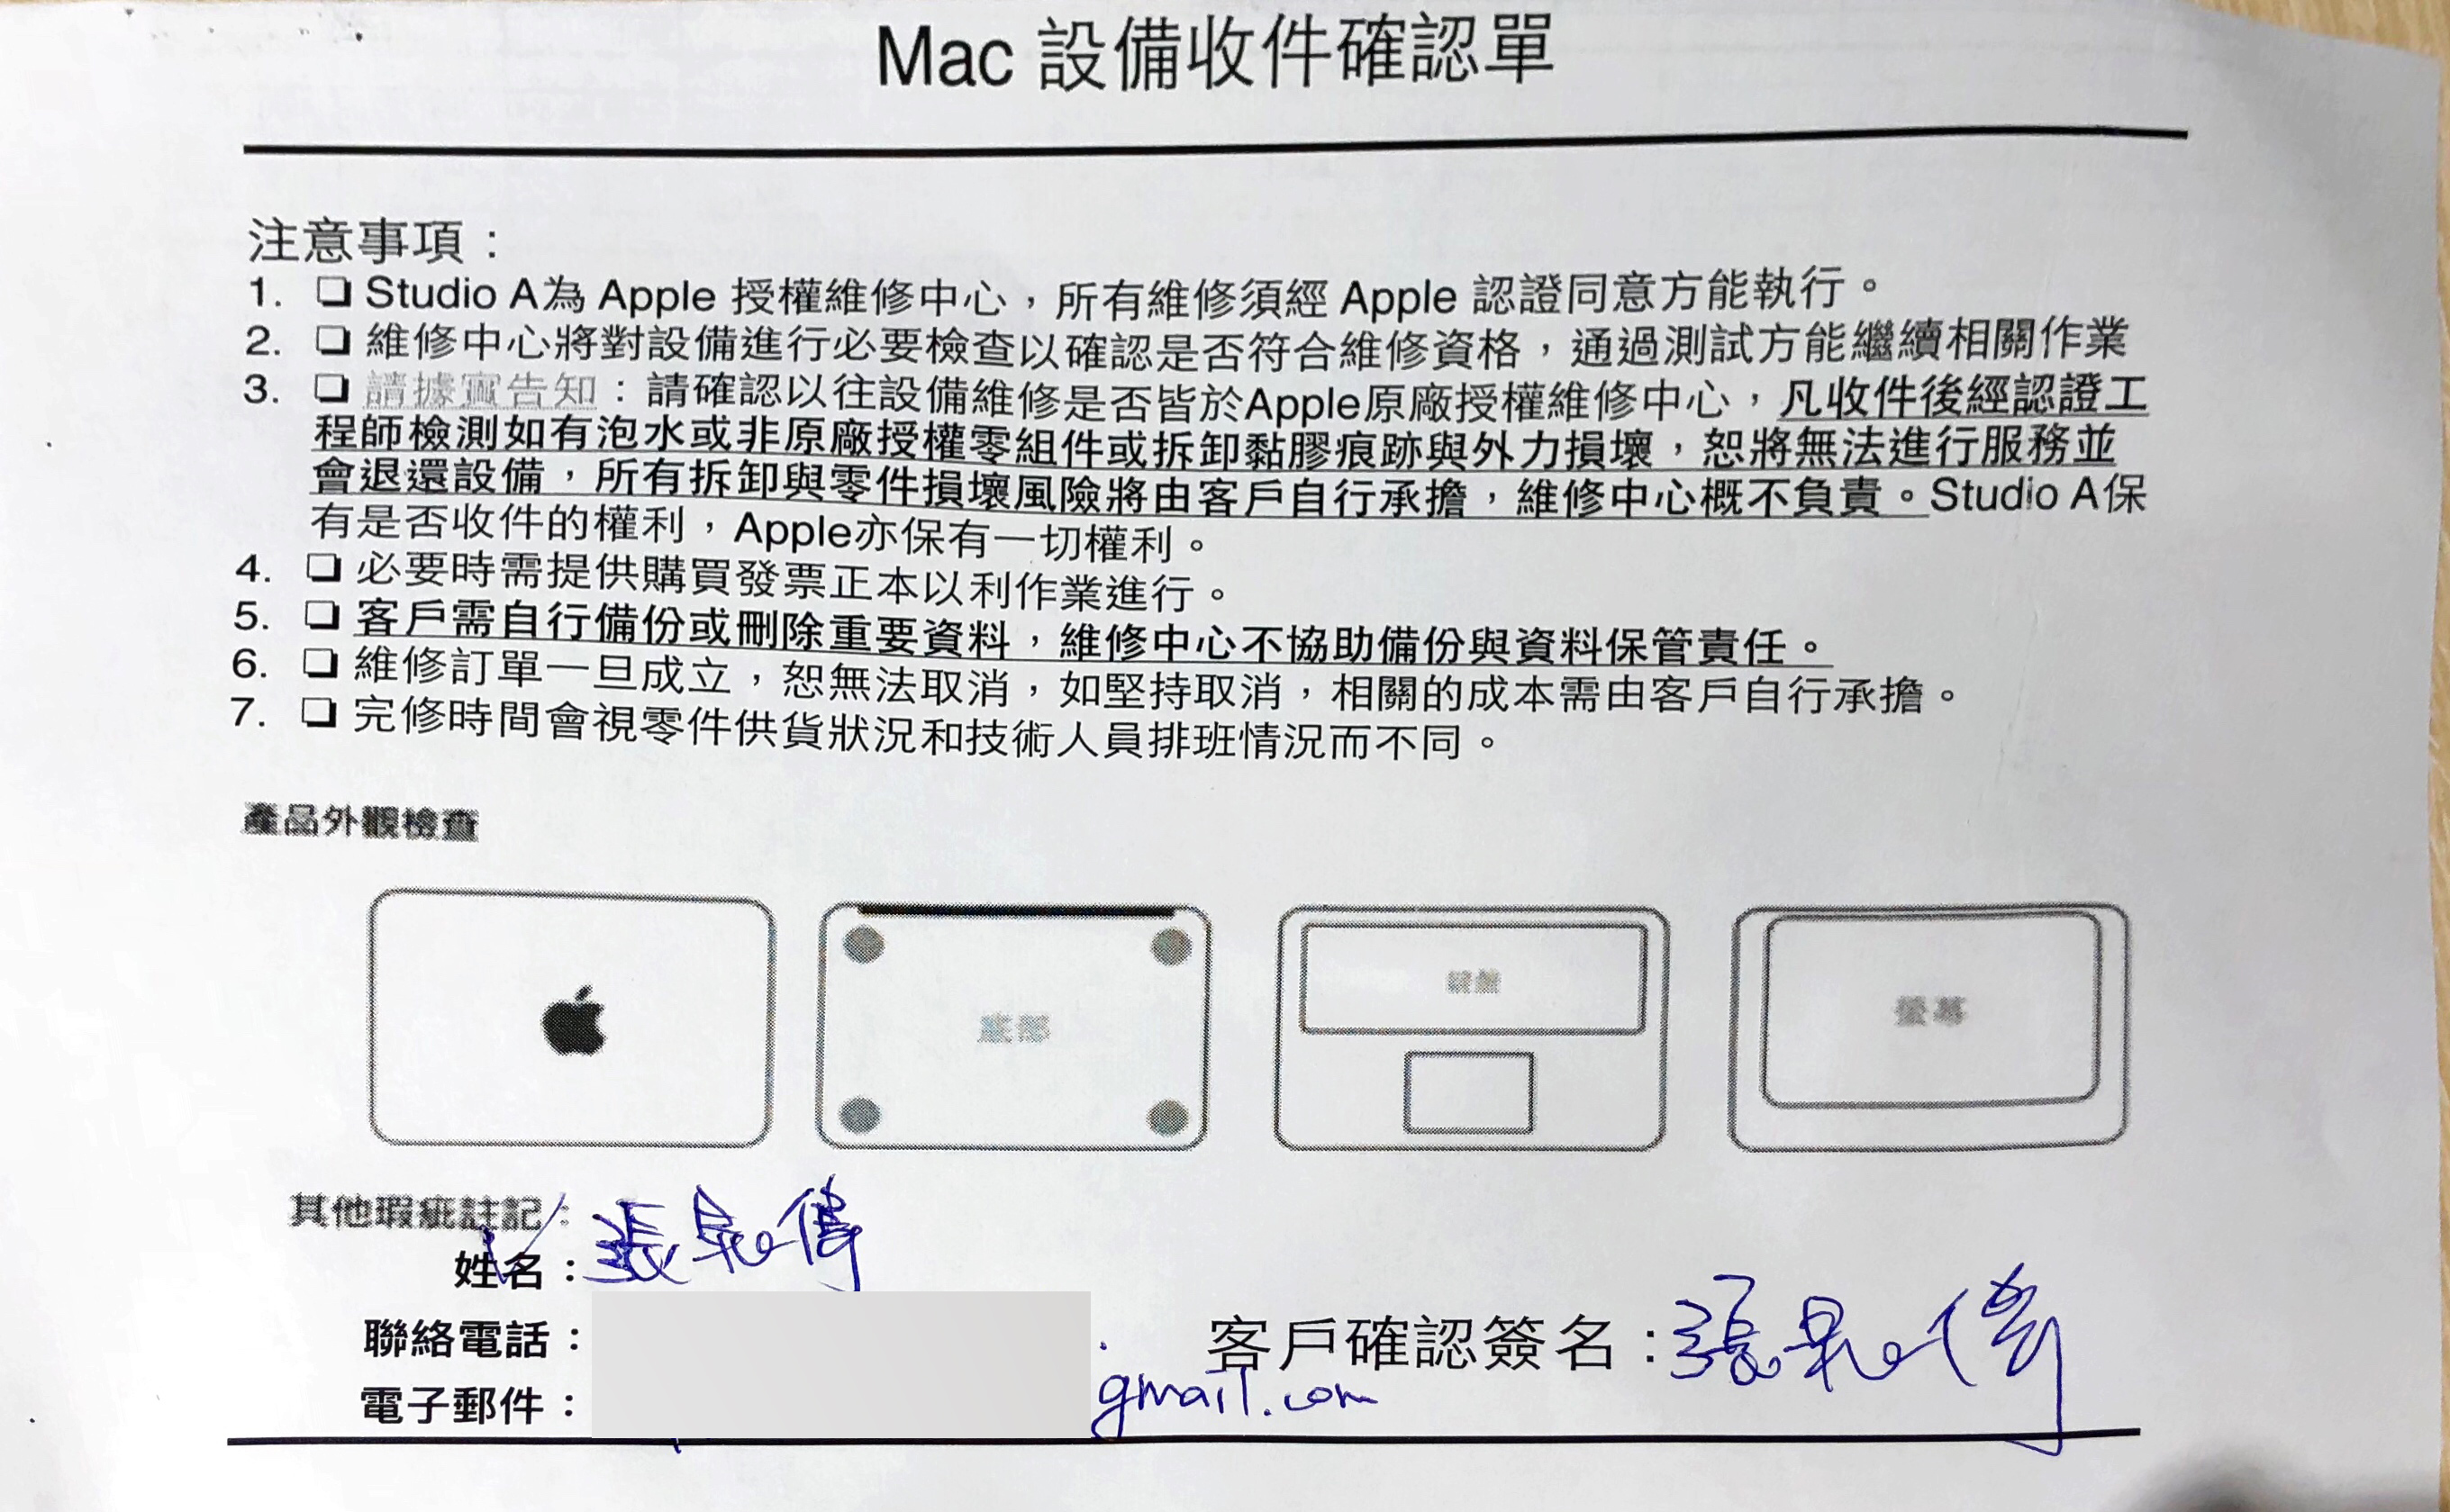 MacBook Pro 鍵盤故障送修過程-Mac 設備收件確認單